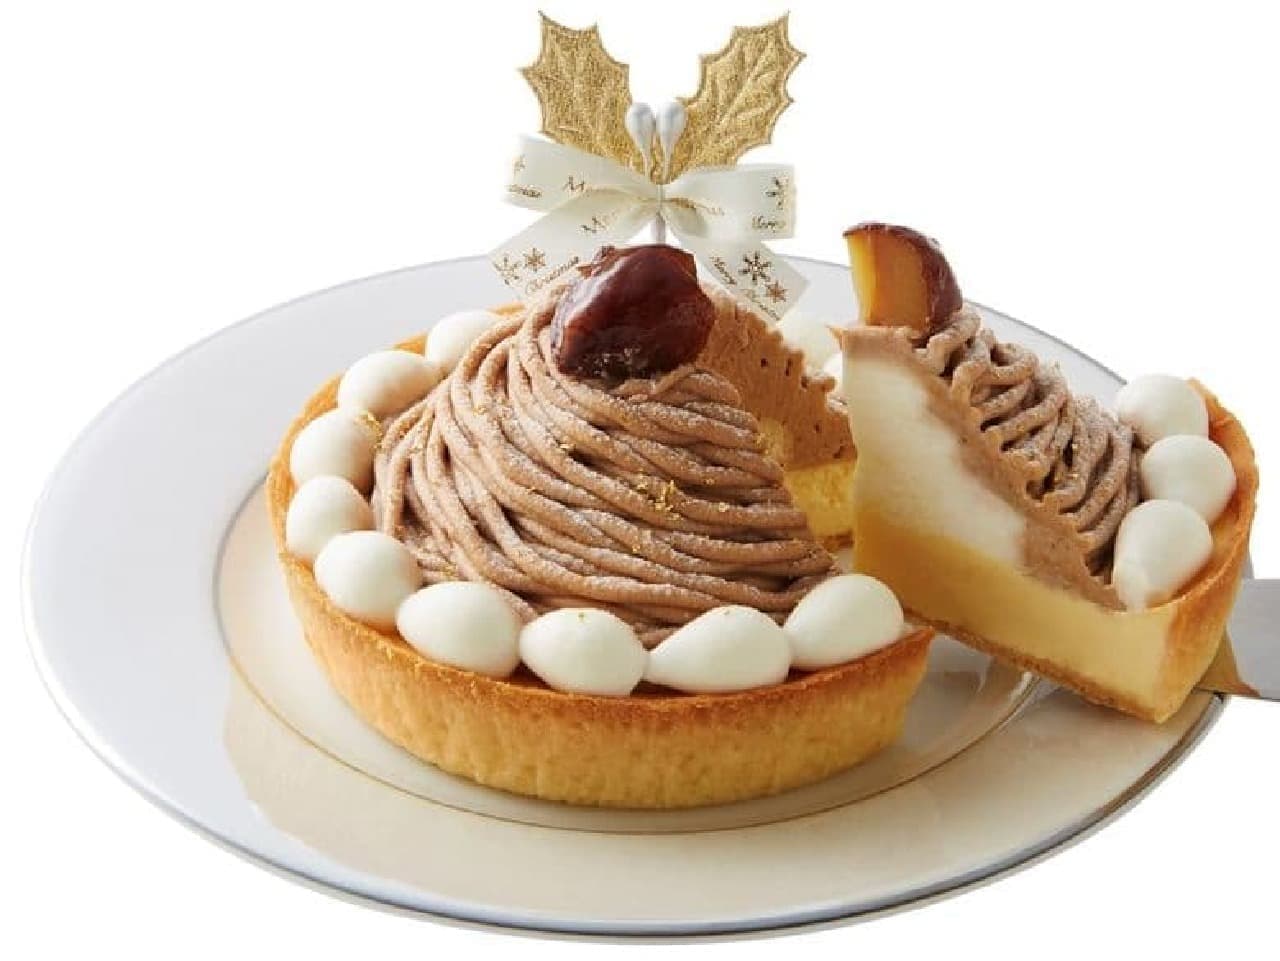 Morozoff "Christmas Mont Blanc Cheesecake"